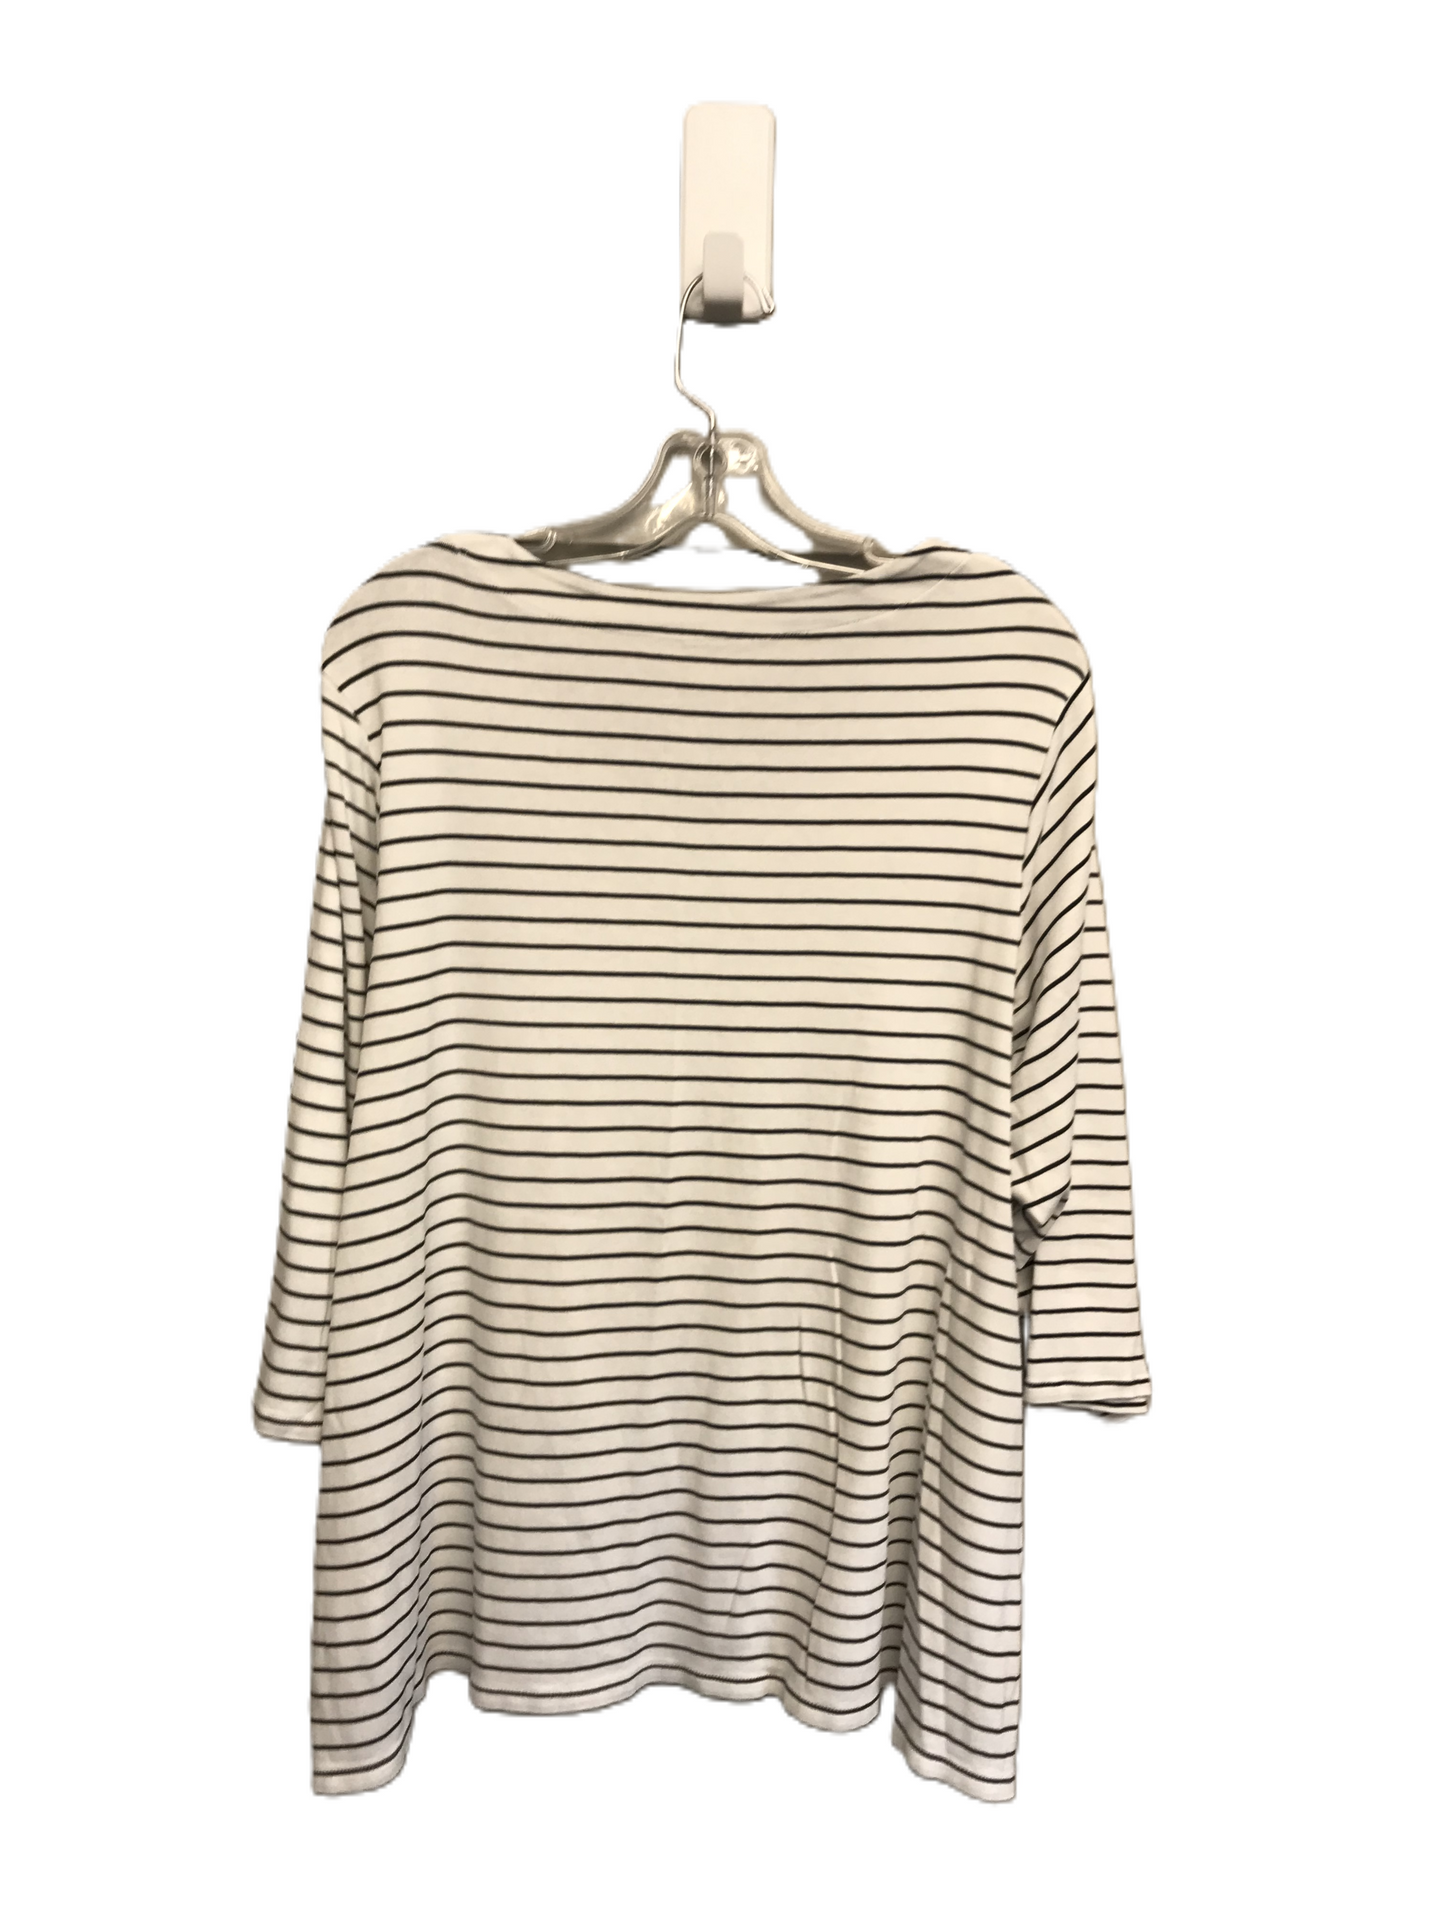 Striped Pattern Top Short Sleeve Basic By J. Jill, Size: 2x